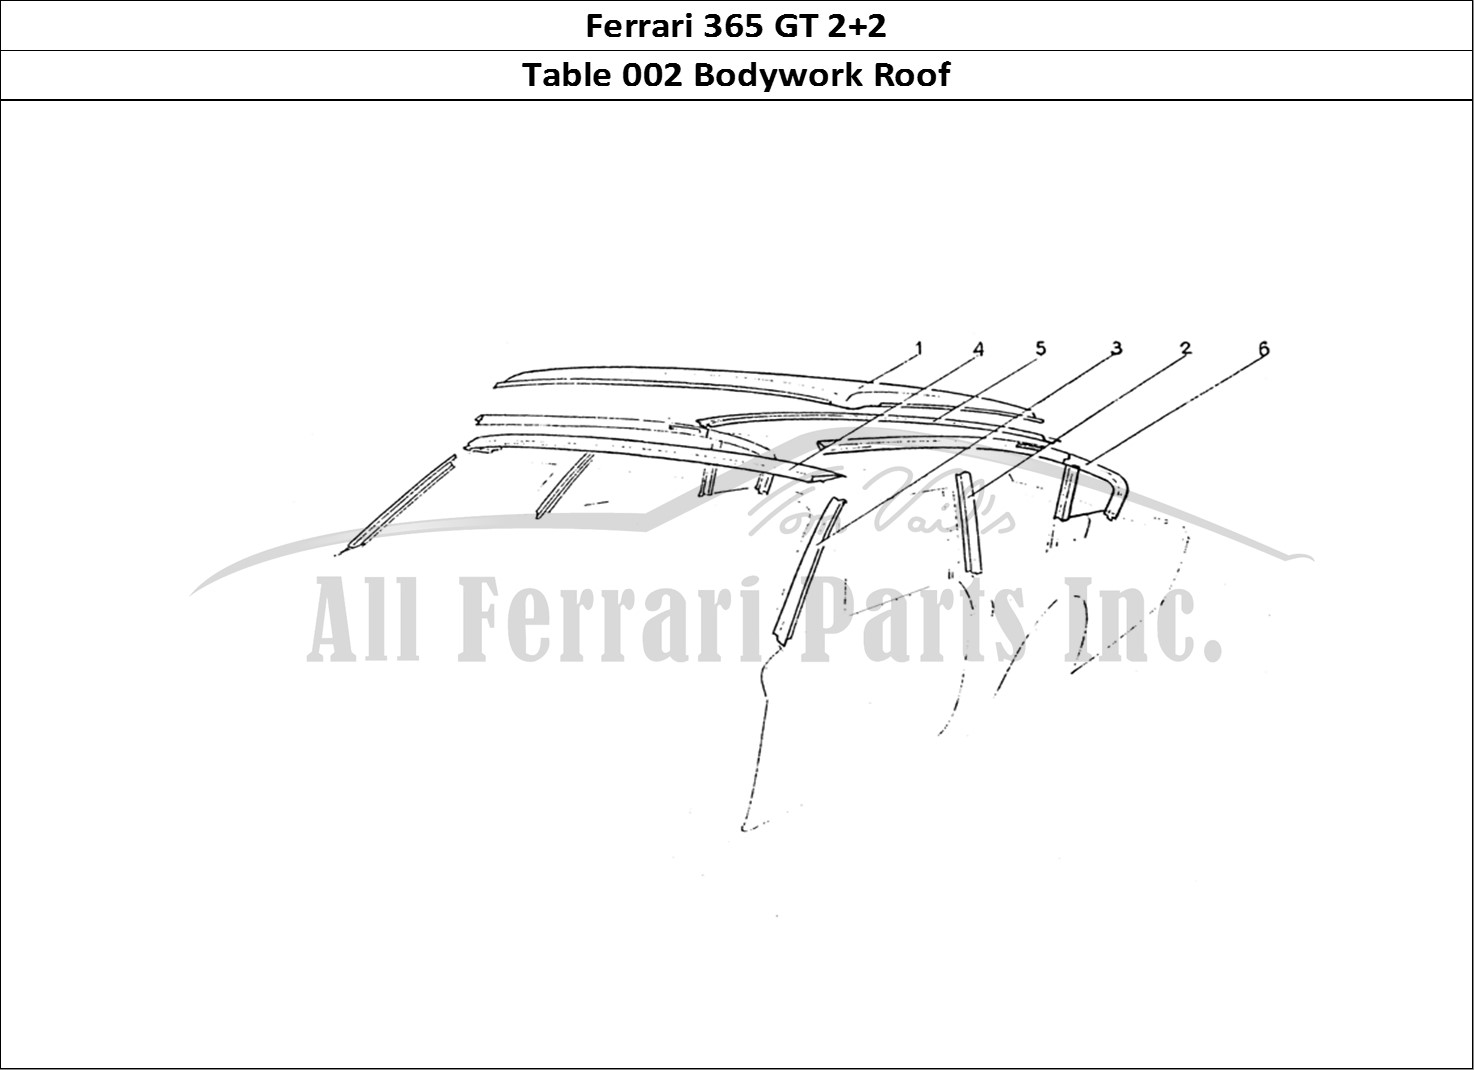 Ferrari Parts Ferrari 365 GT 2+2 (Coachwork) Page 002 Frame work roof